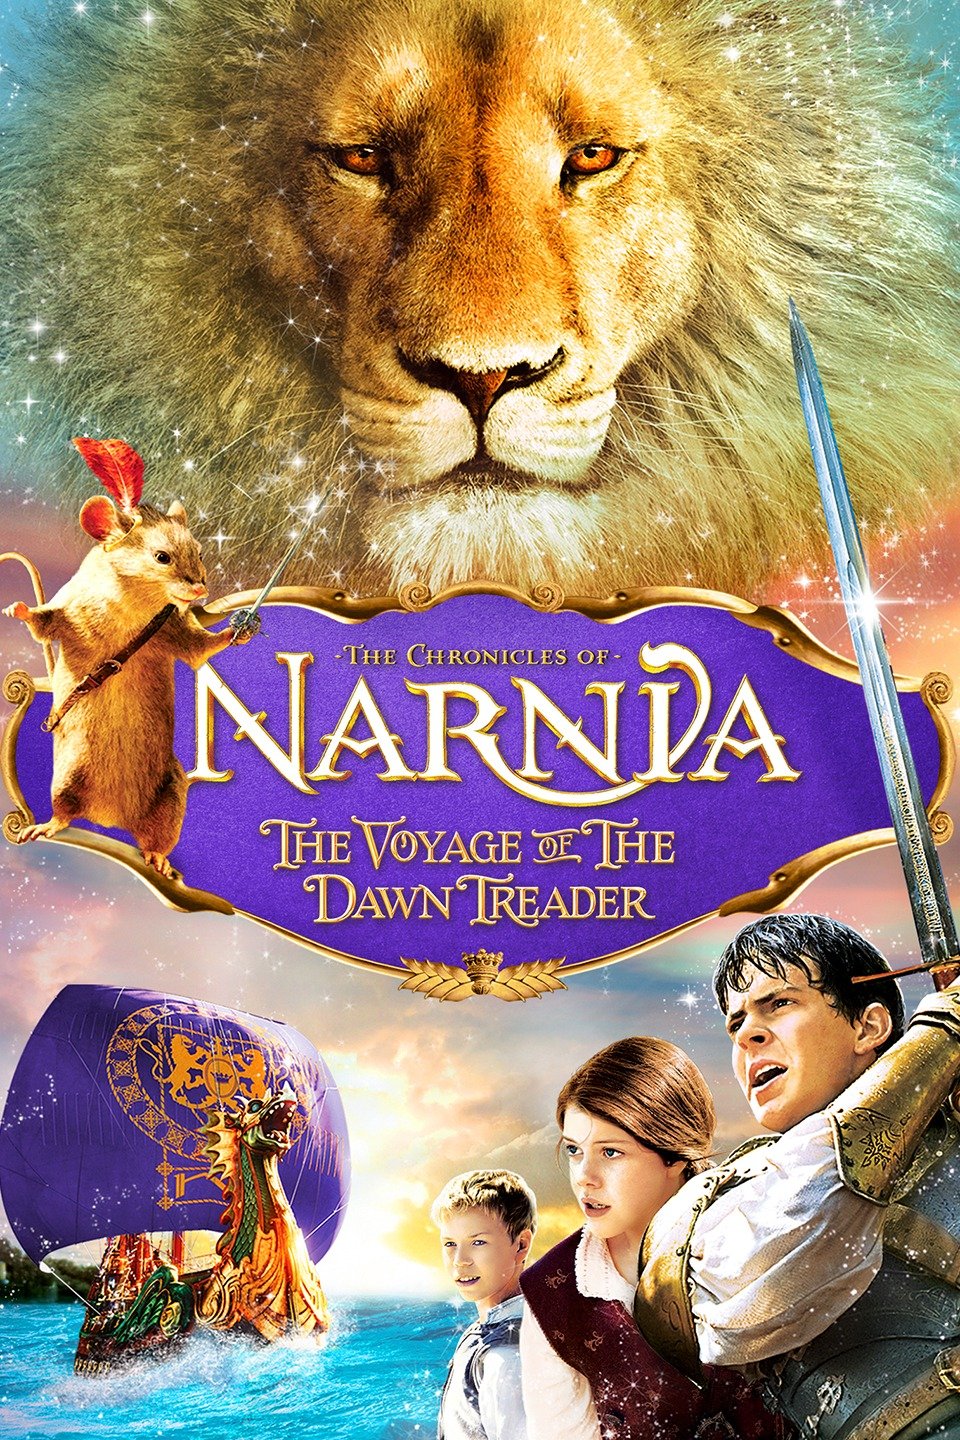 [MINI Super-HQ] The Chronicles of Narnia: The Voyage of the Dawn Treader (2010) อภินิหารตำนานแห่งนาร์เนีย ภาค 3 [1080p] [พากย์ไทย 5.1 + เสียงอังกฤษ DTS] [บรรยายไทย + อังกฤษ] [เสียงไทย + ซับไทย] [OPENLOAD]